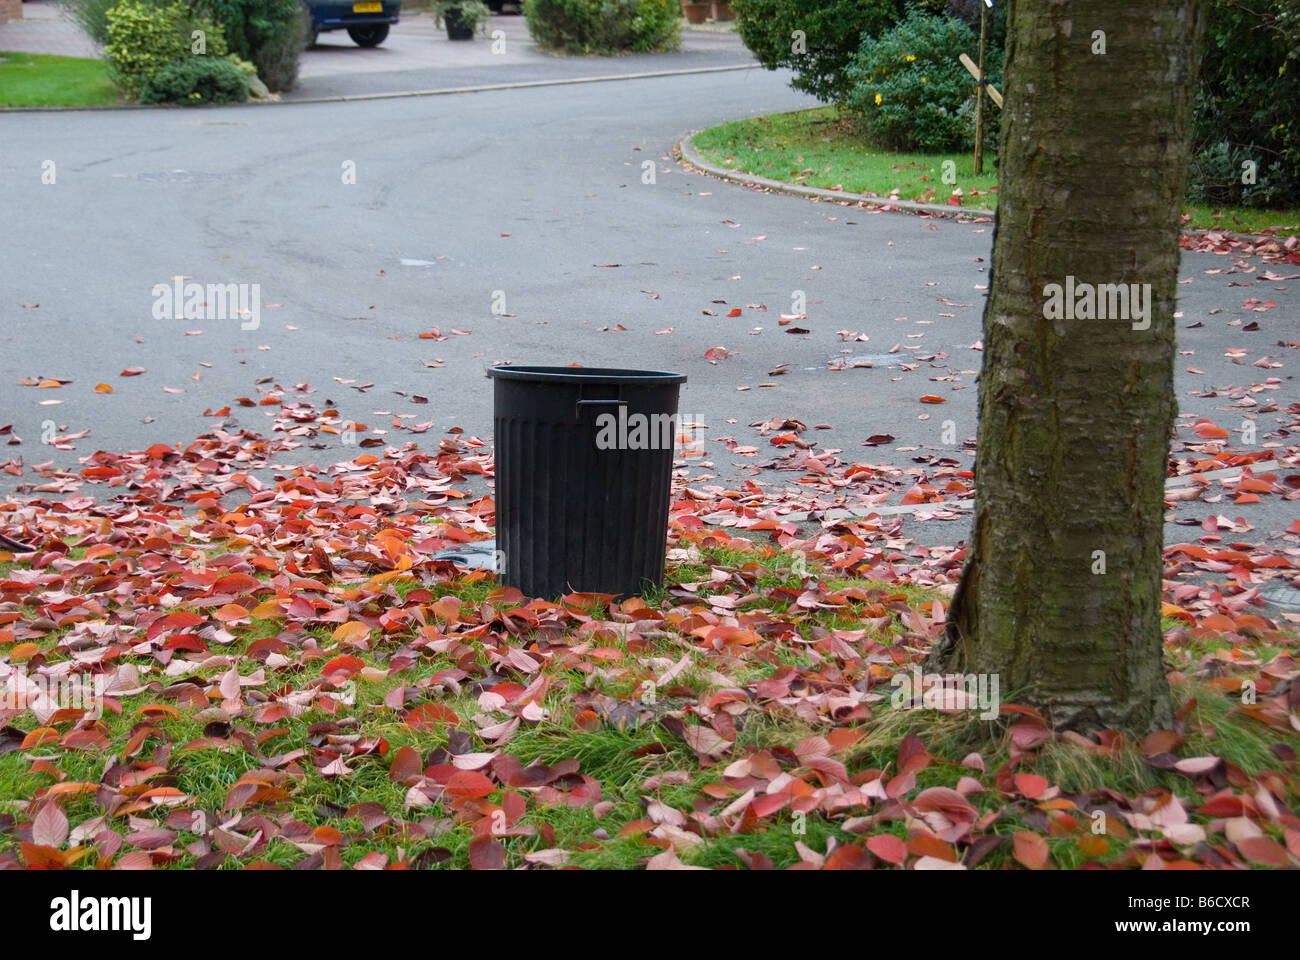 A refuse dustbin sat among fallen autumn leaves Stock Photo